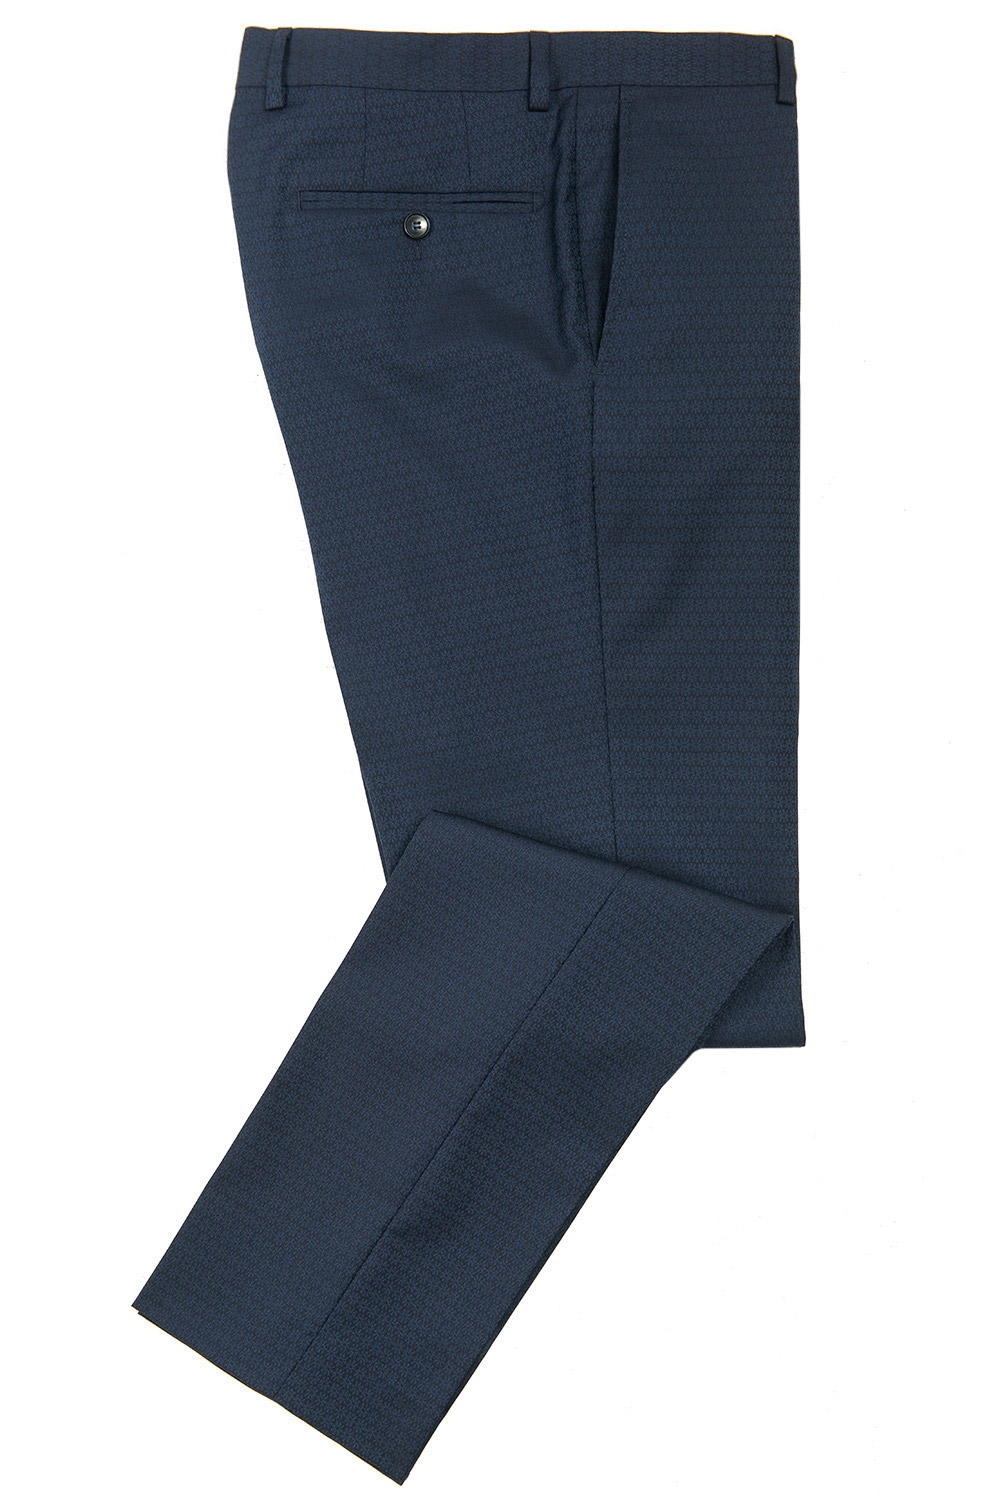 Pantaloni superslim fabian bleumarin print geometric 1